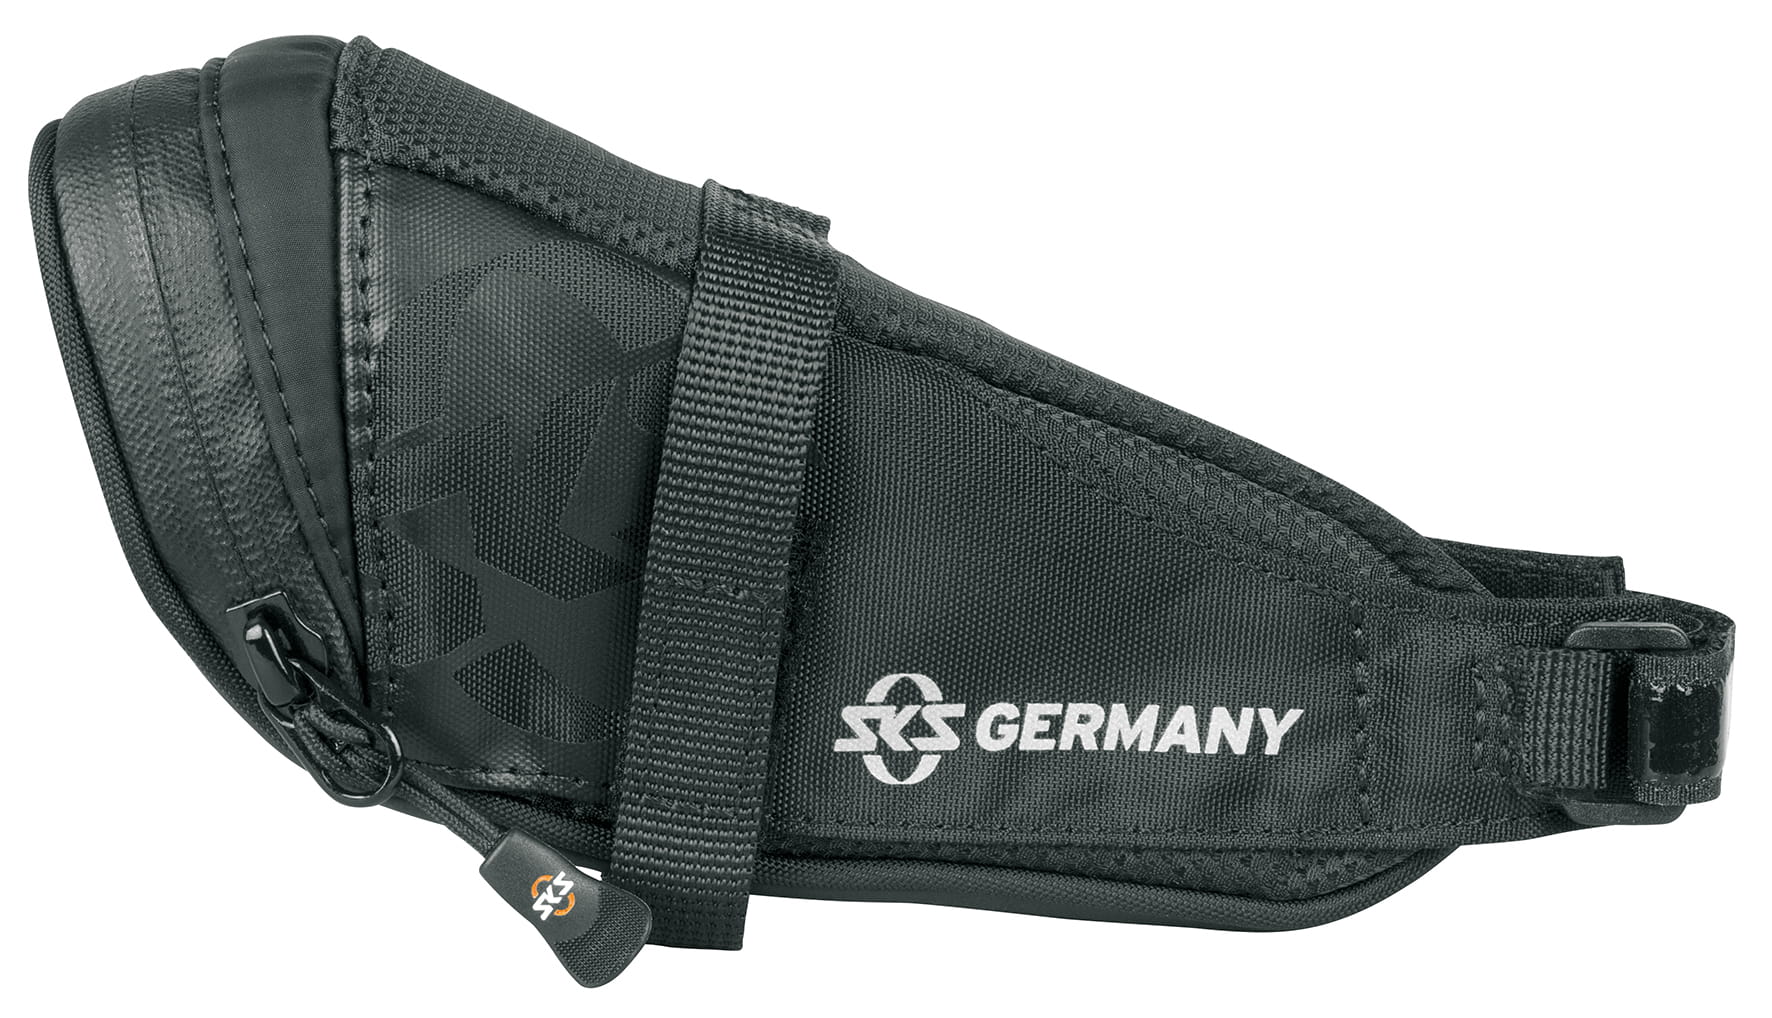 Shimano Pro Mini Strap Saddlebag Saddle Bicycle Seat Bag Small Black 0.4l for sale online 